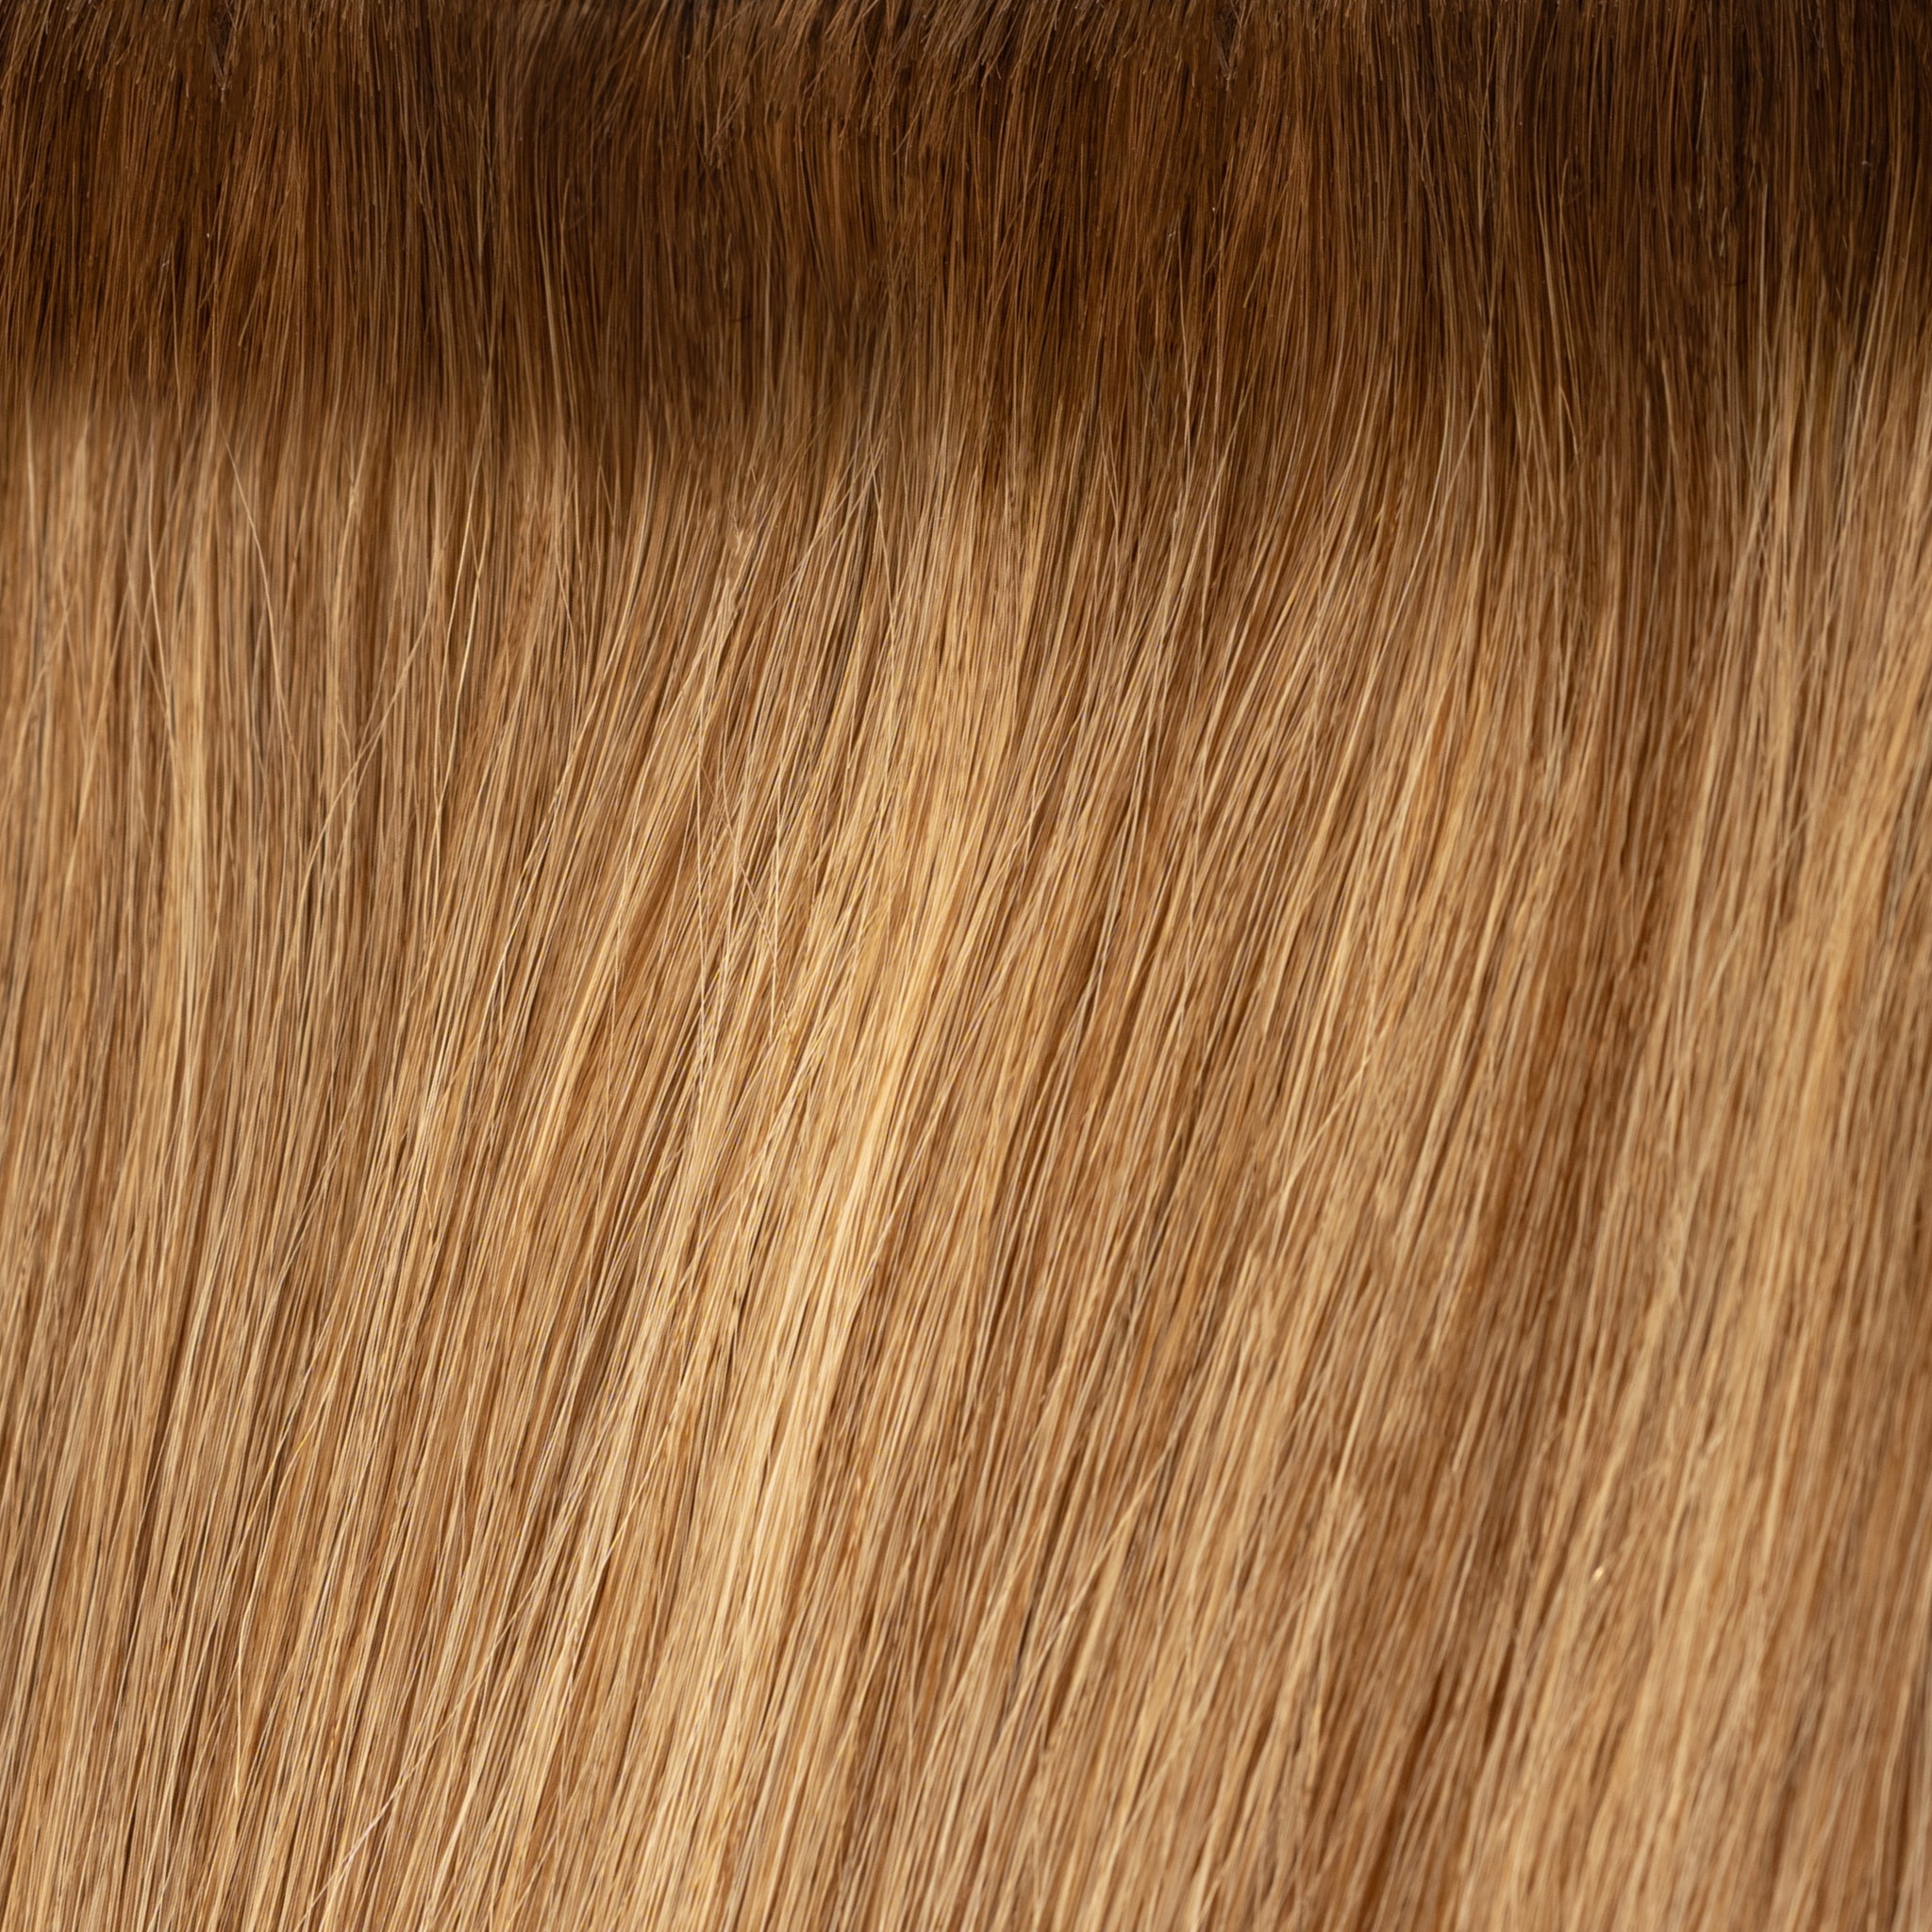 Light Brown Beige Blonde 'Erie' Root Tap Blend Aura Hair Extension